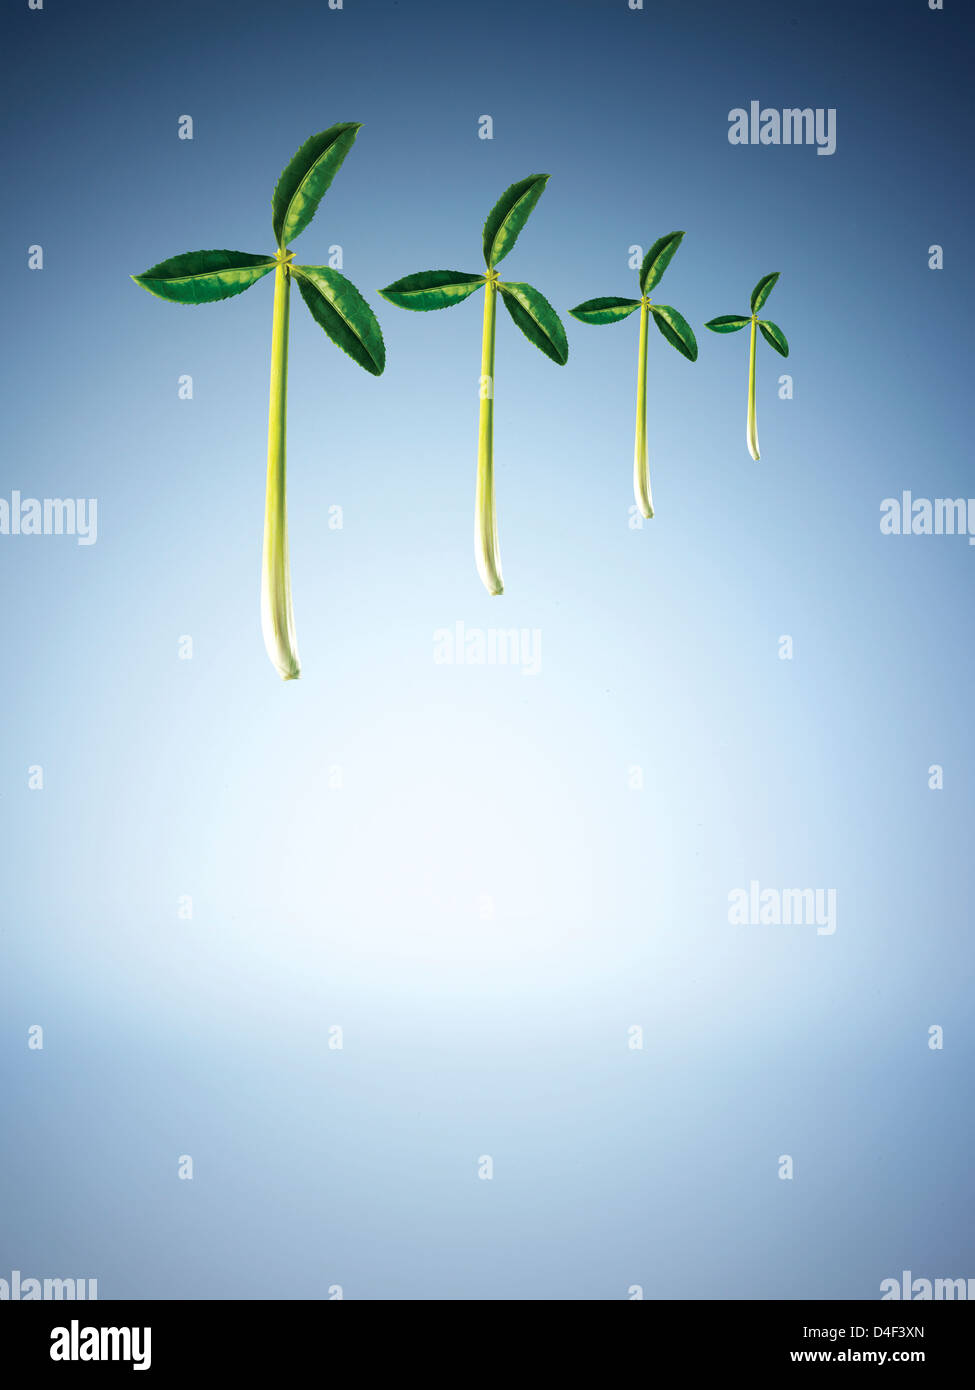 Illustration of leaves and stalks in pinwheel shape Stock Photo